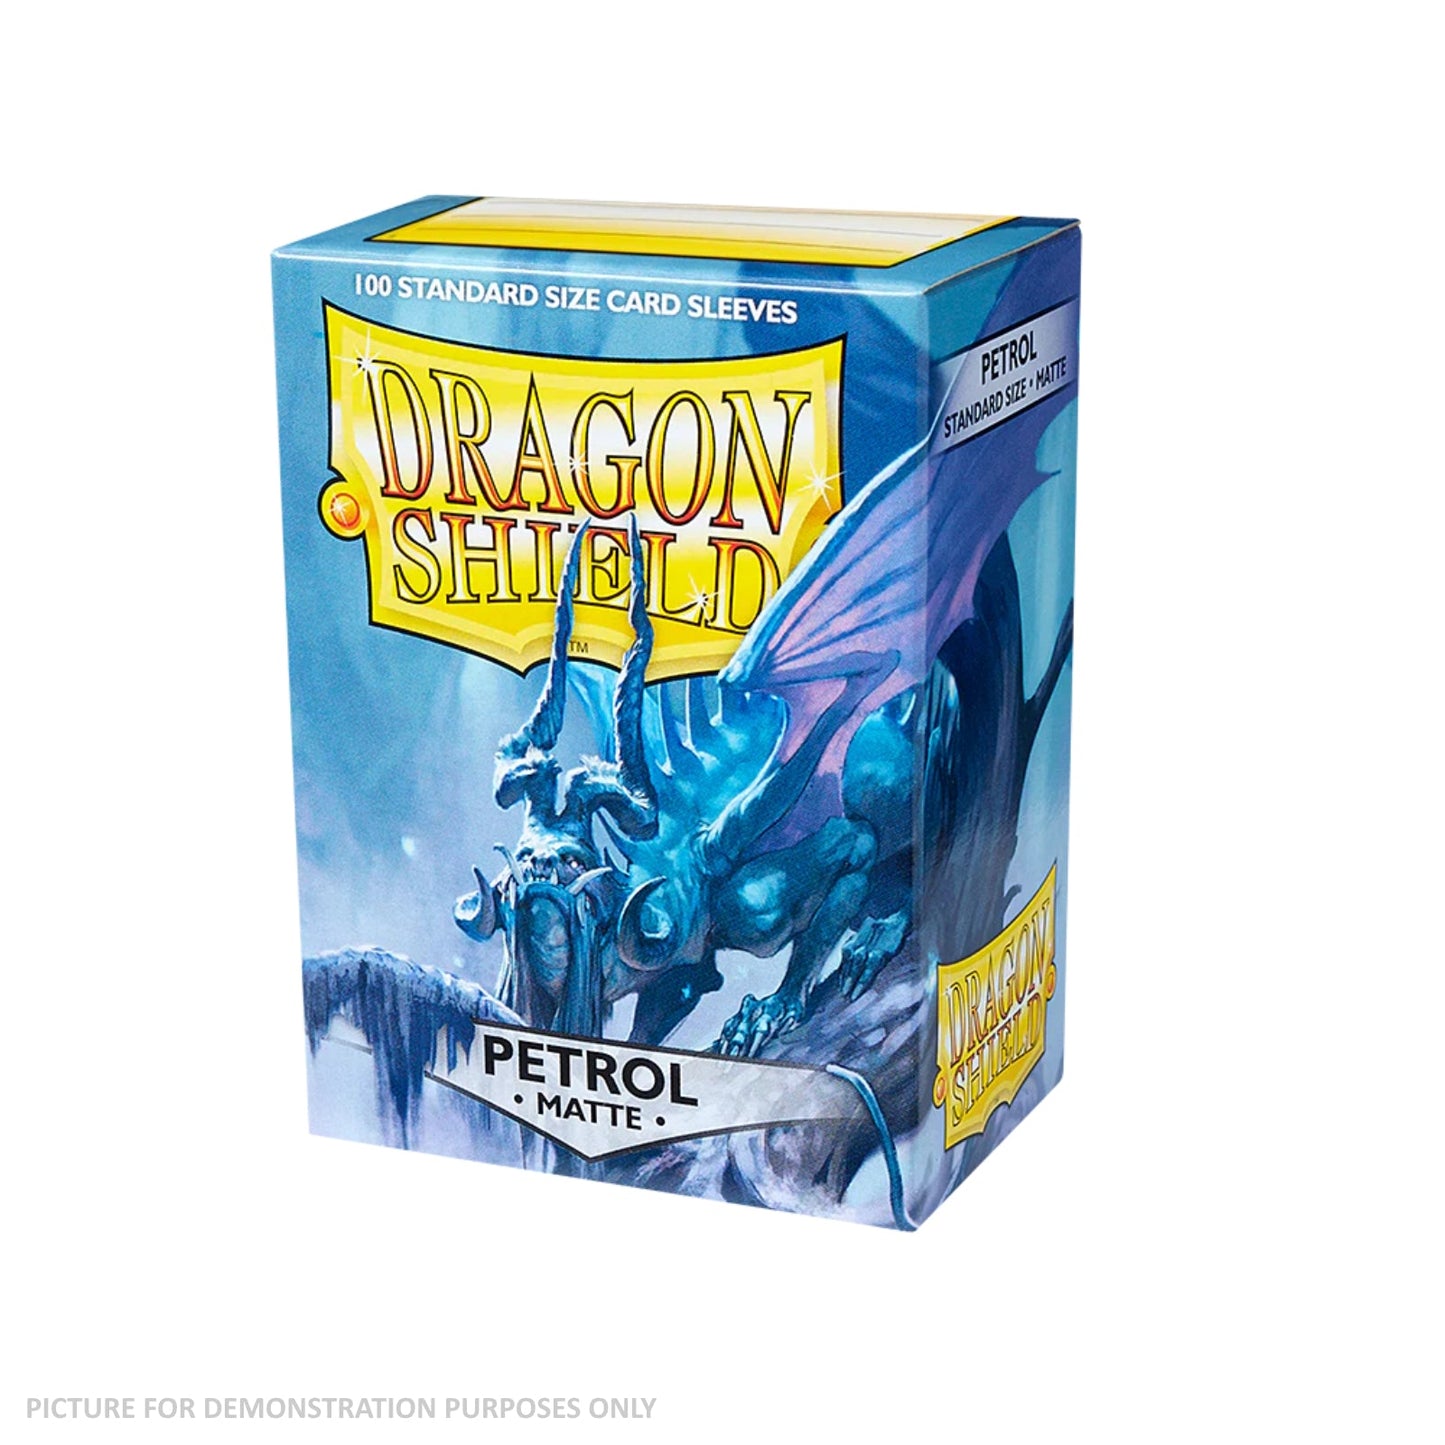 Dragon Shield 100 Standard Size Card Sleeves - Matte Petrol